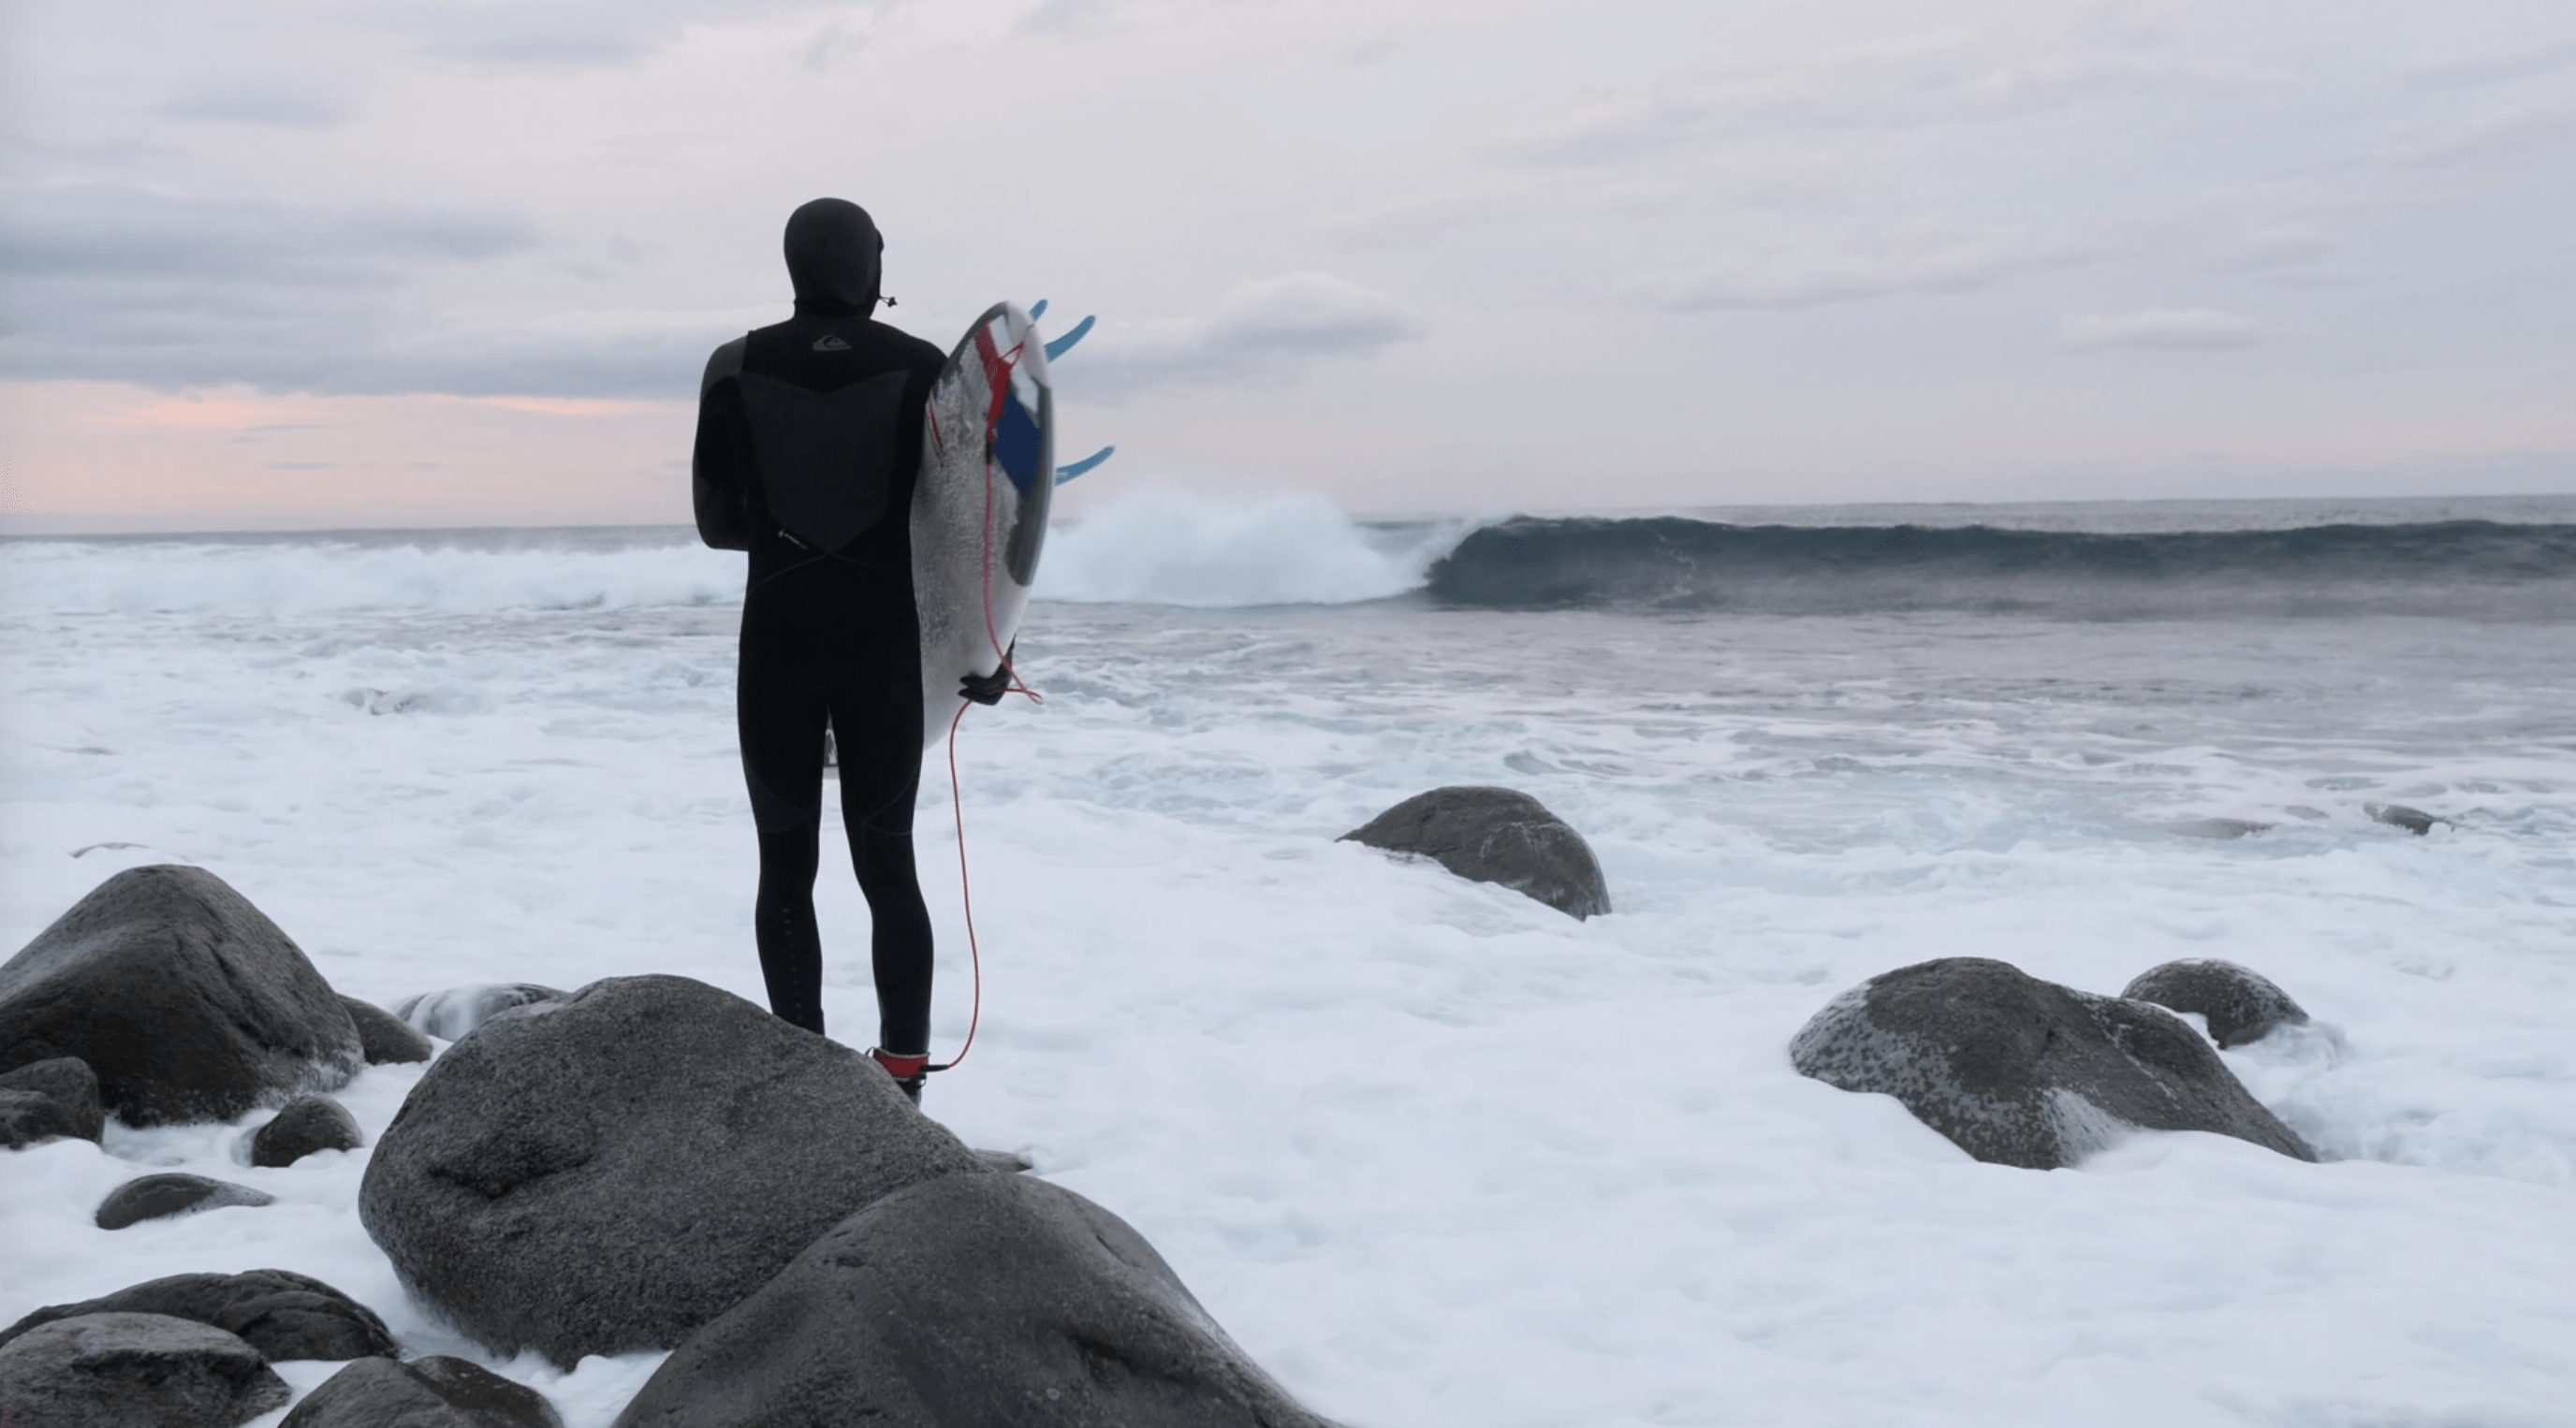 Arctic January – Norsk bidrag i årets Cold Hawaii Film Festival